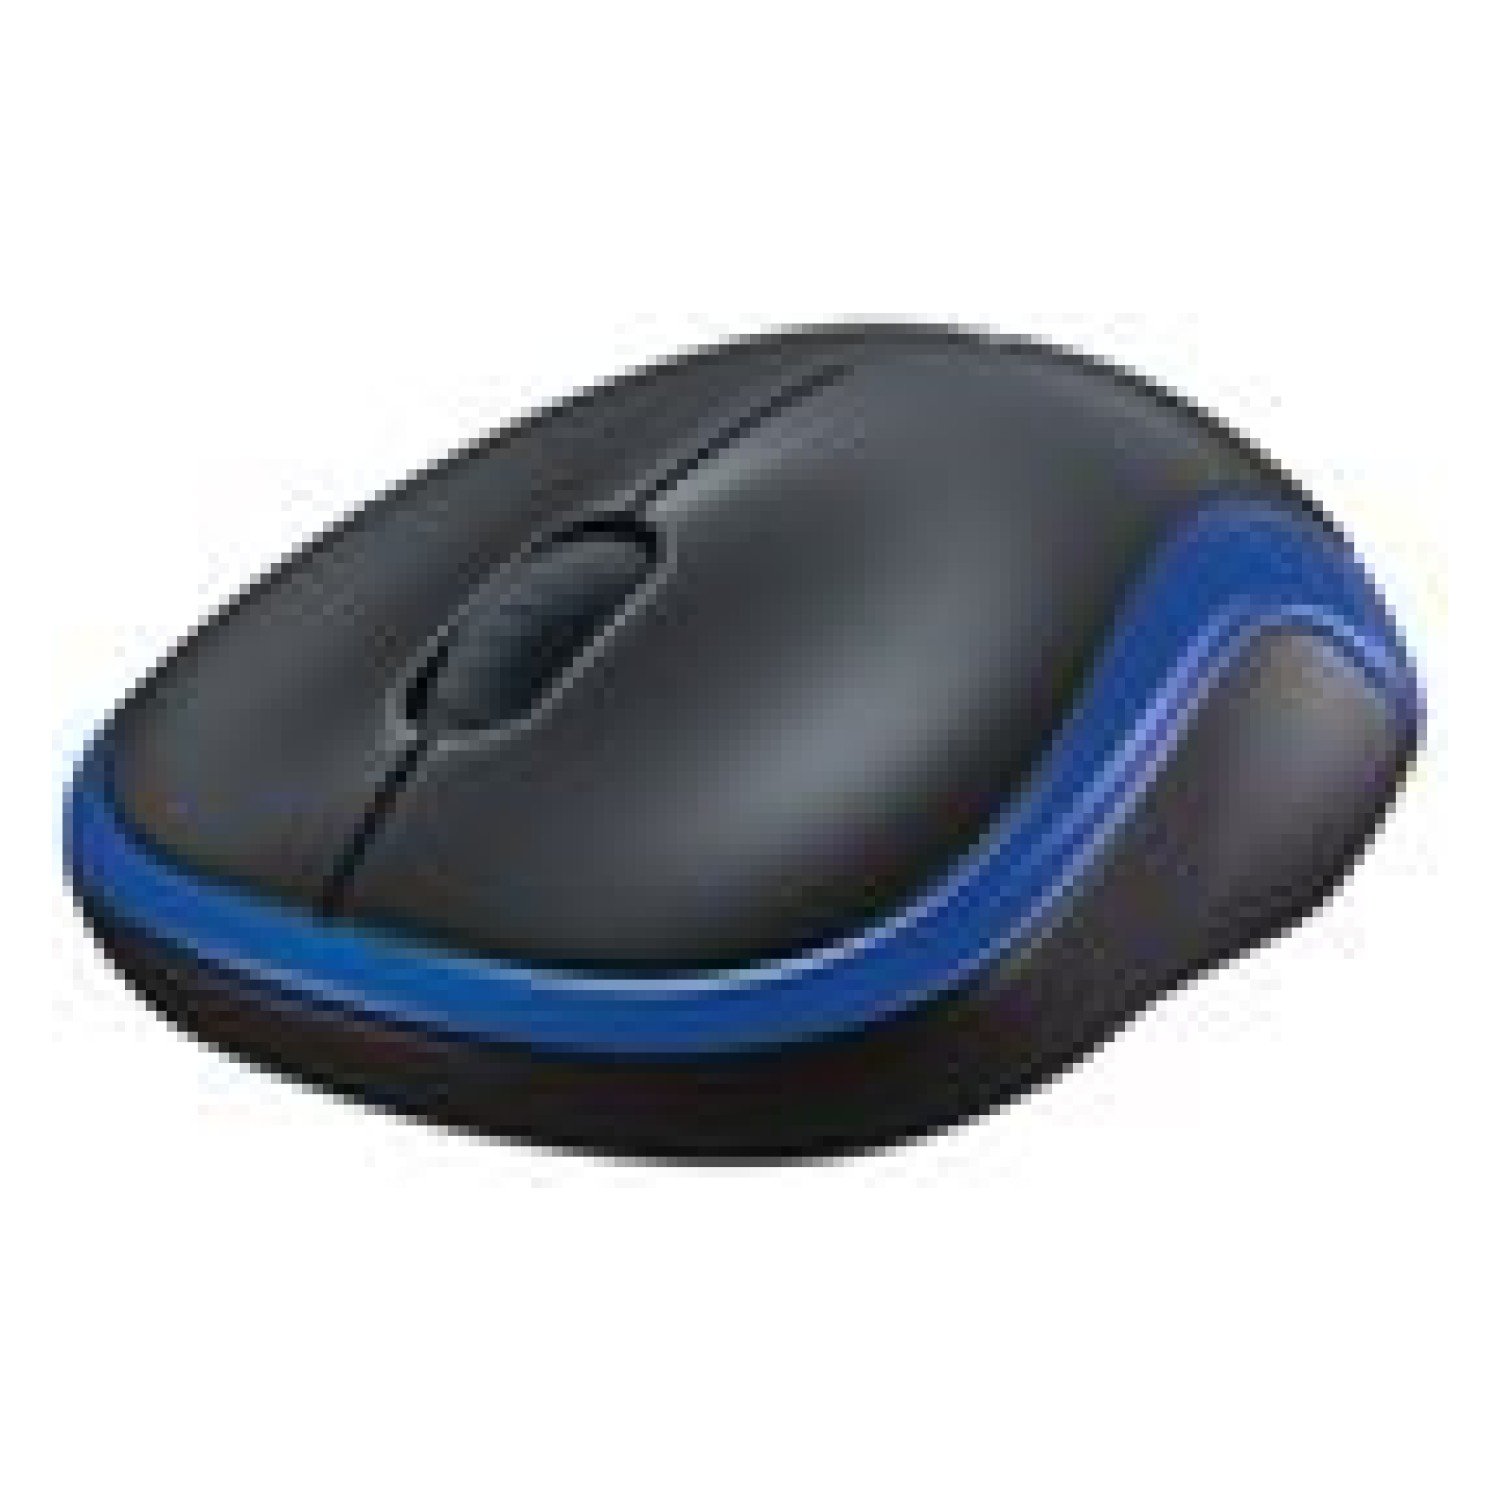 LOGI M185 Wireless Mouse BLUE EWR2